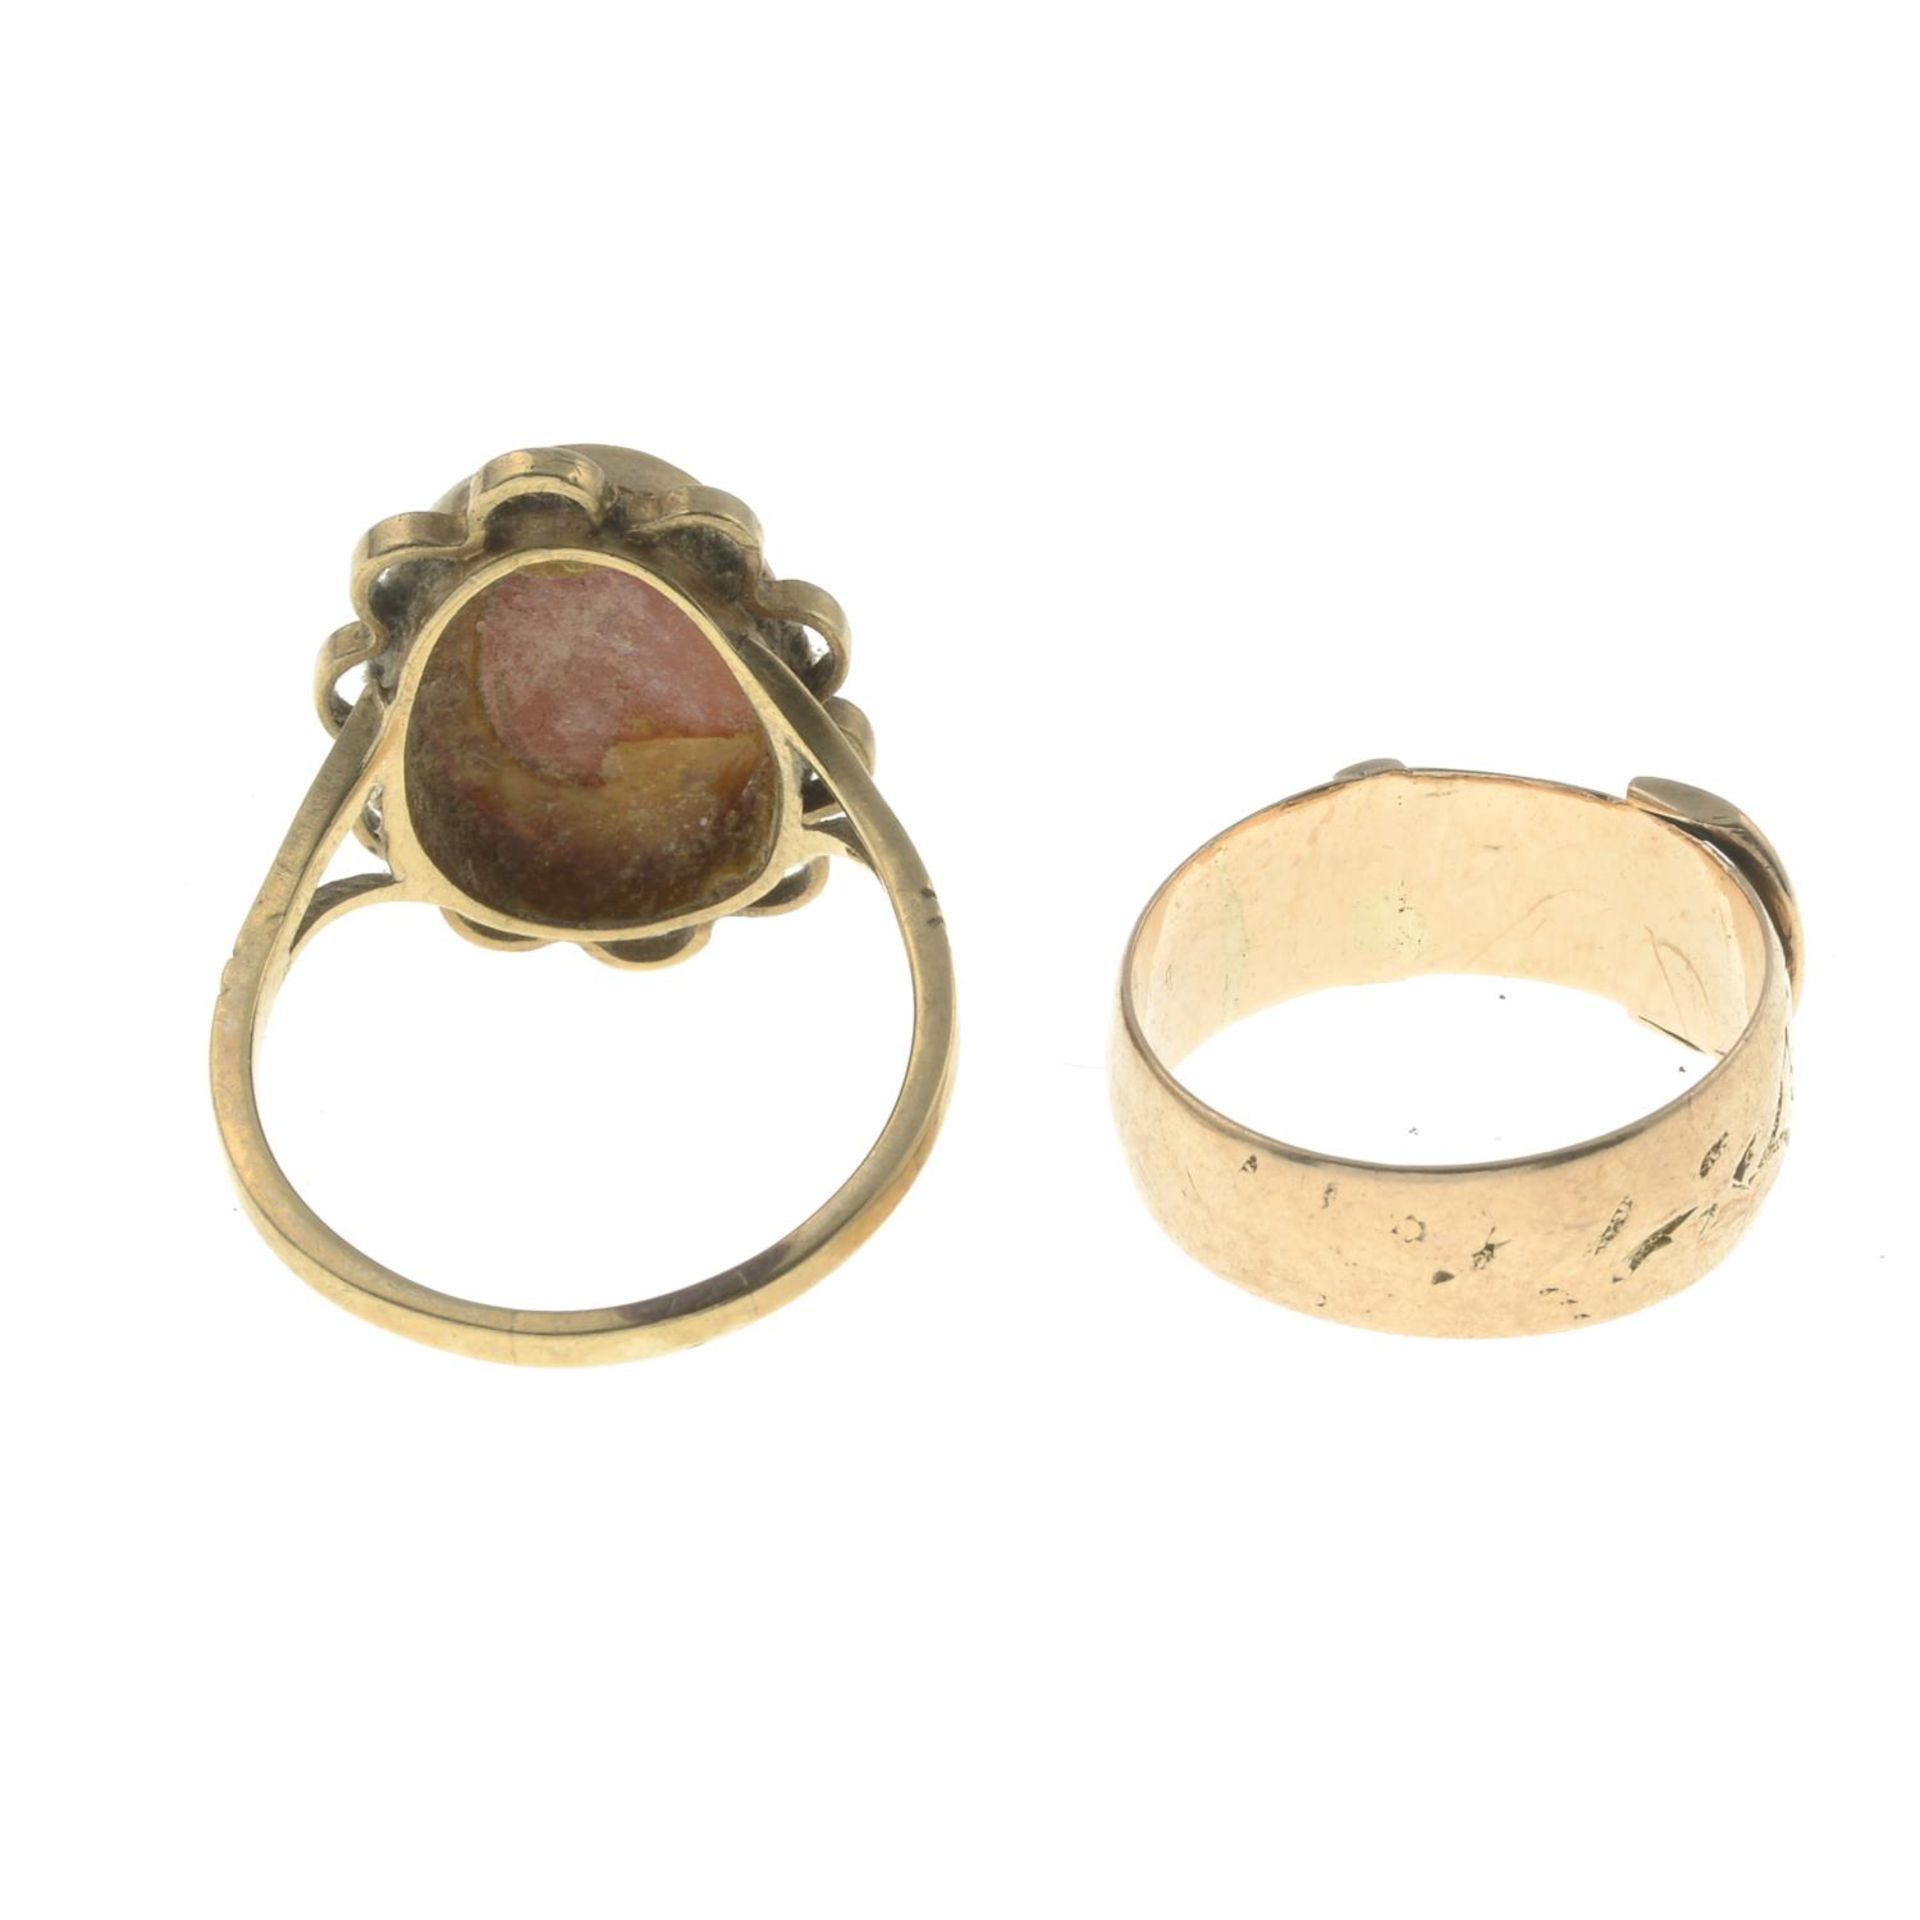 Edwardian 9ct gold buckle ring, hallmarks for Birmingham, 1905, ring size K1/2, 2.9gms. - Image 2 of 2